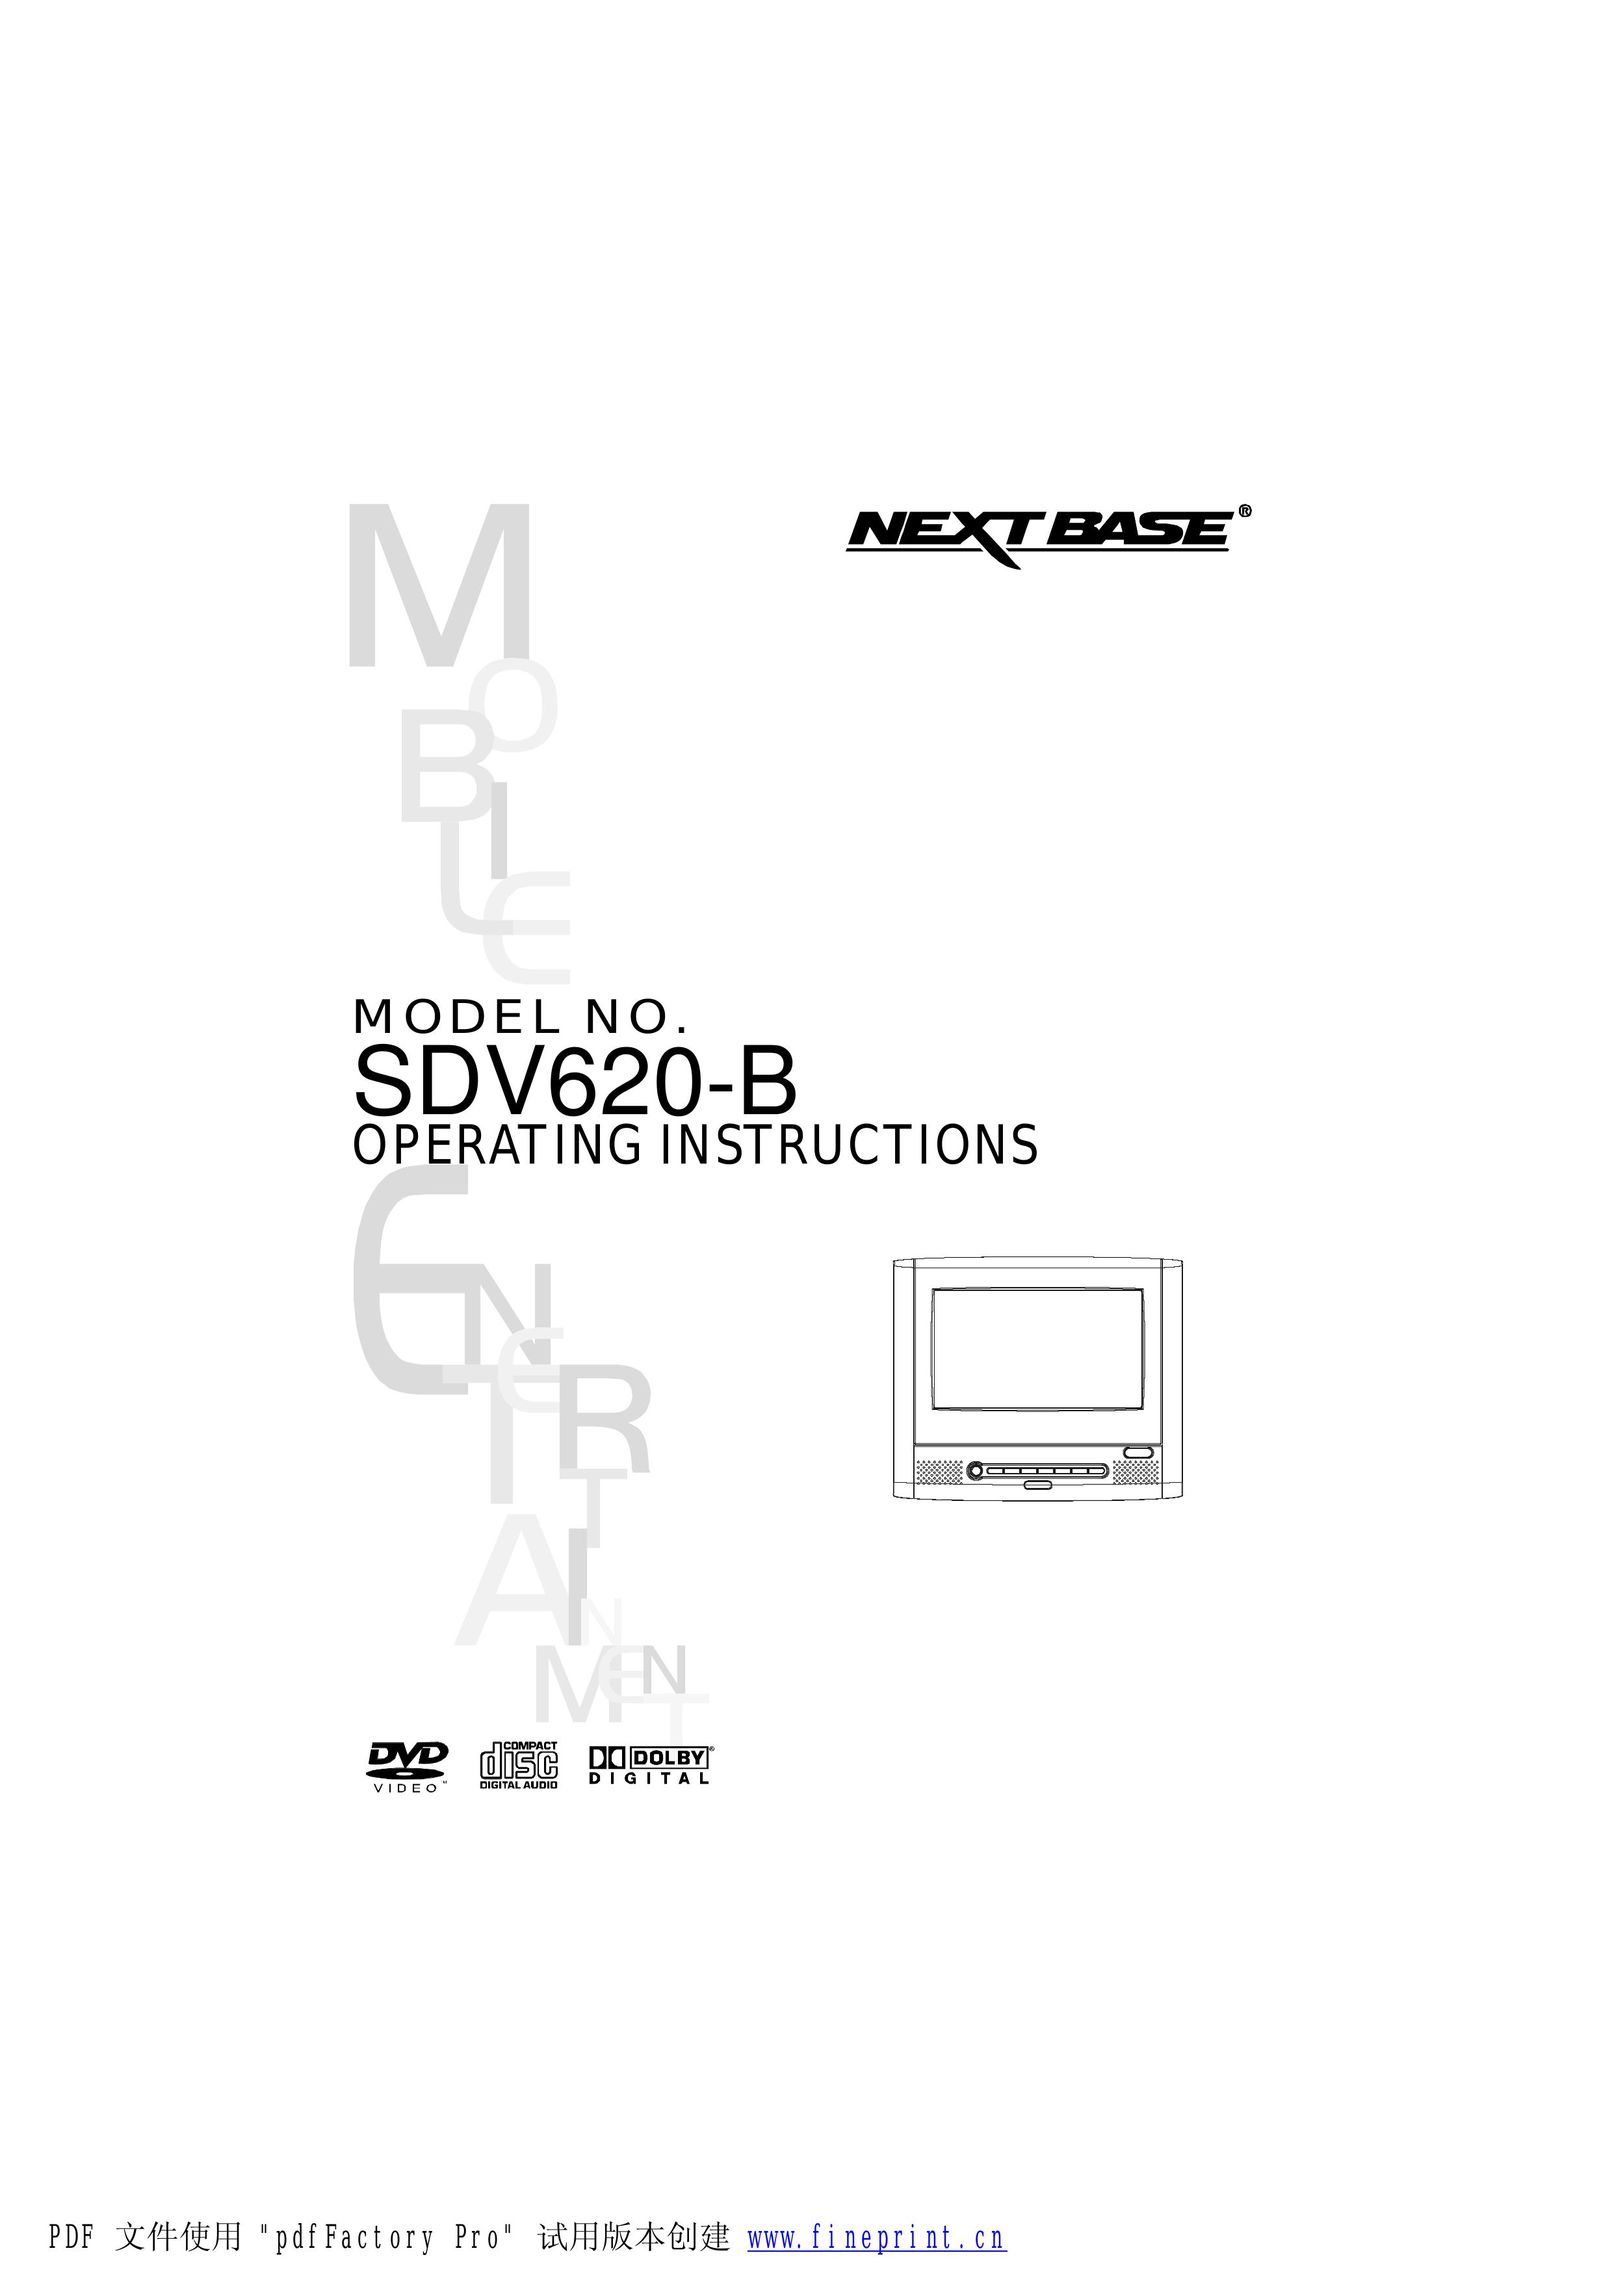 NextBase SDV620-B Portable DVD Player User Manual